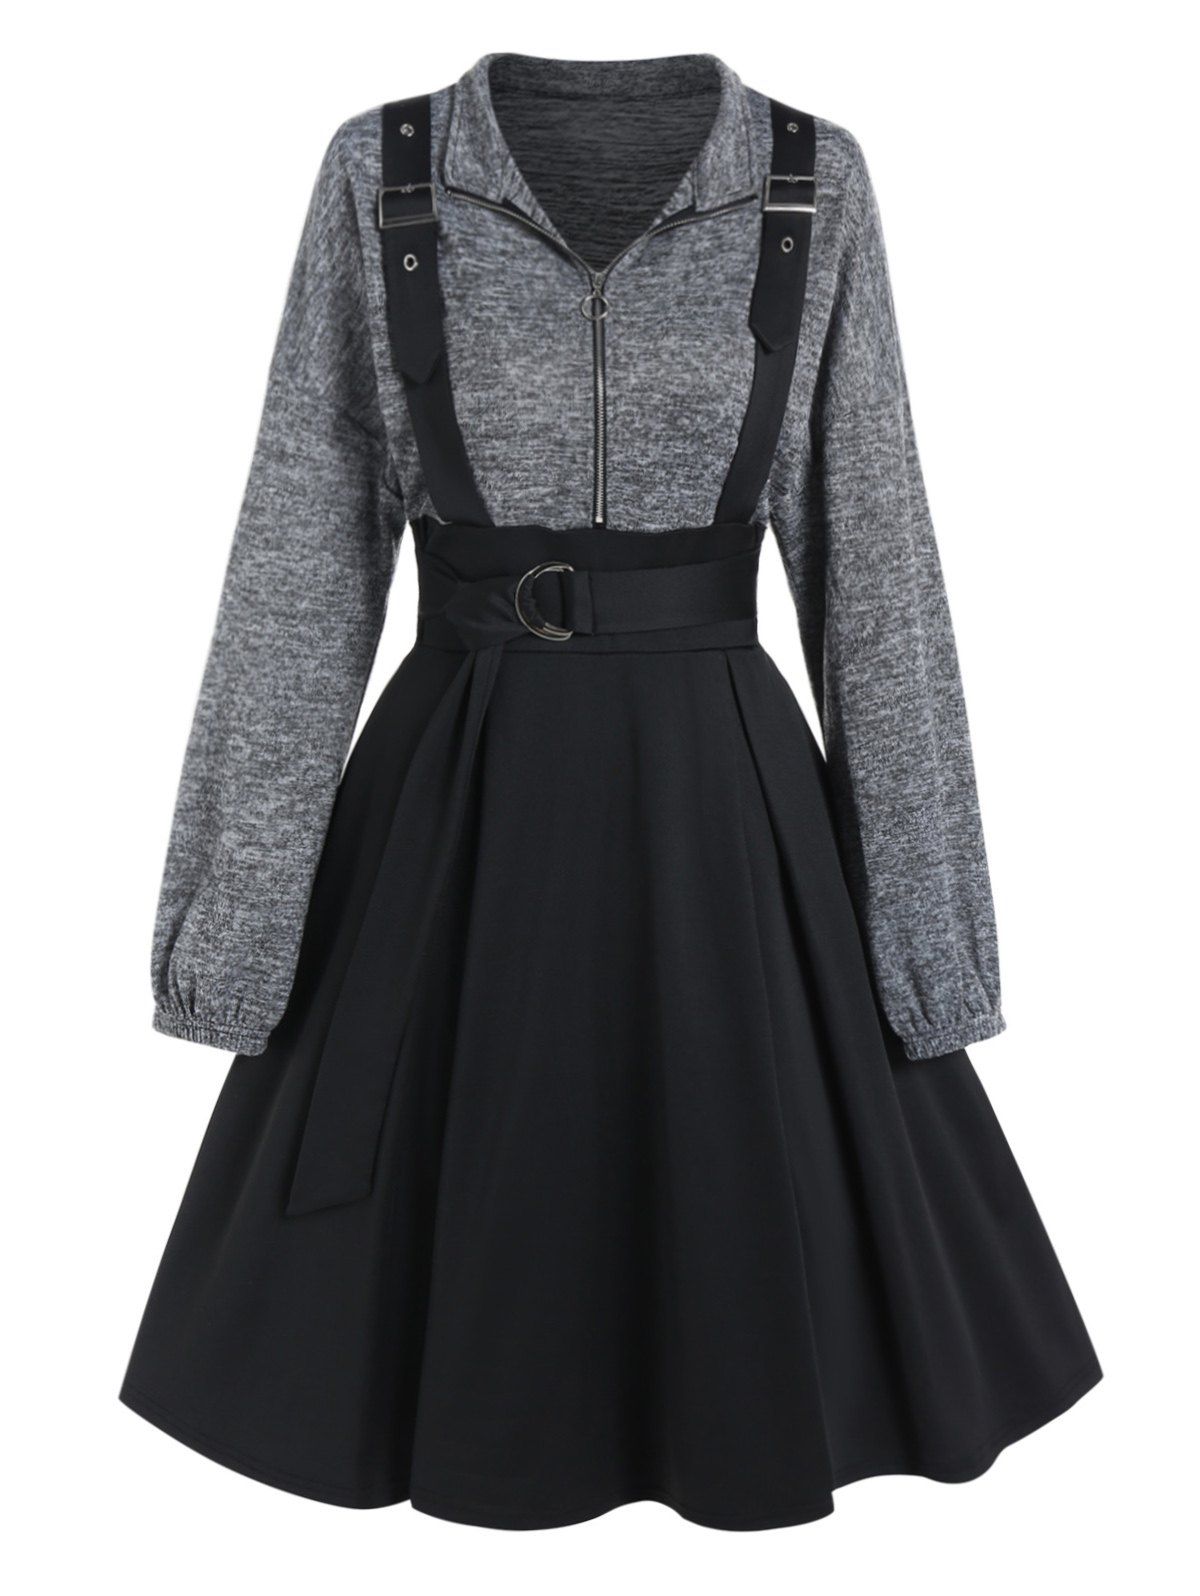 Colorblock Faux Twinset Dress Space Dye Half Zipper Self Belted Long Sleeve A Line Mini Dress - BLACK L